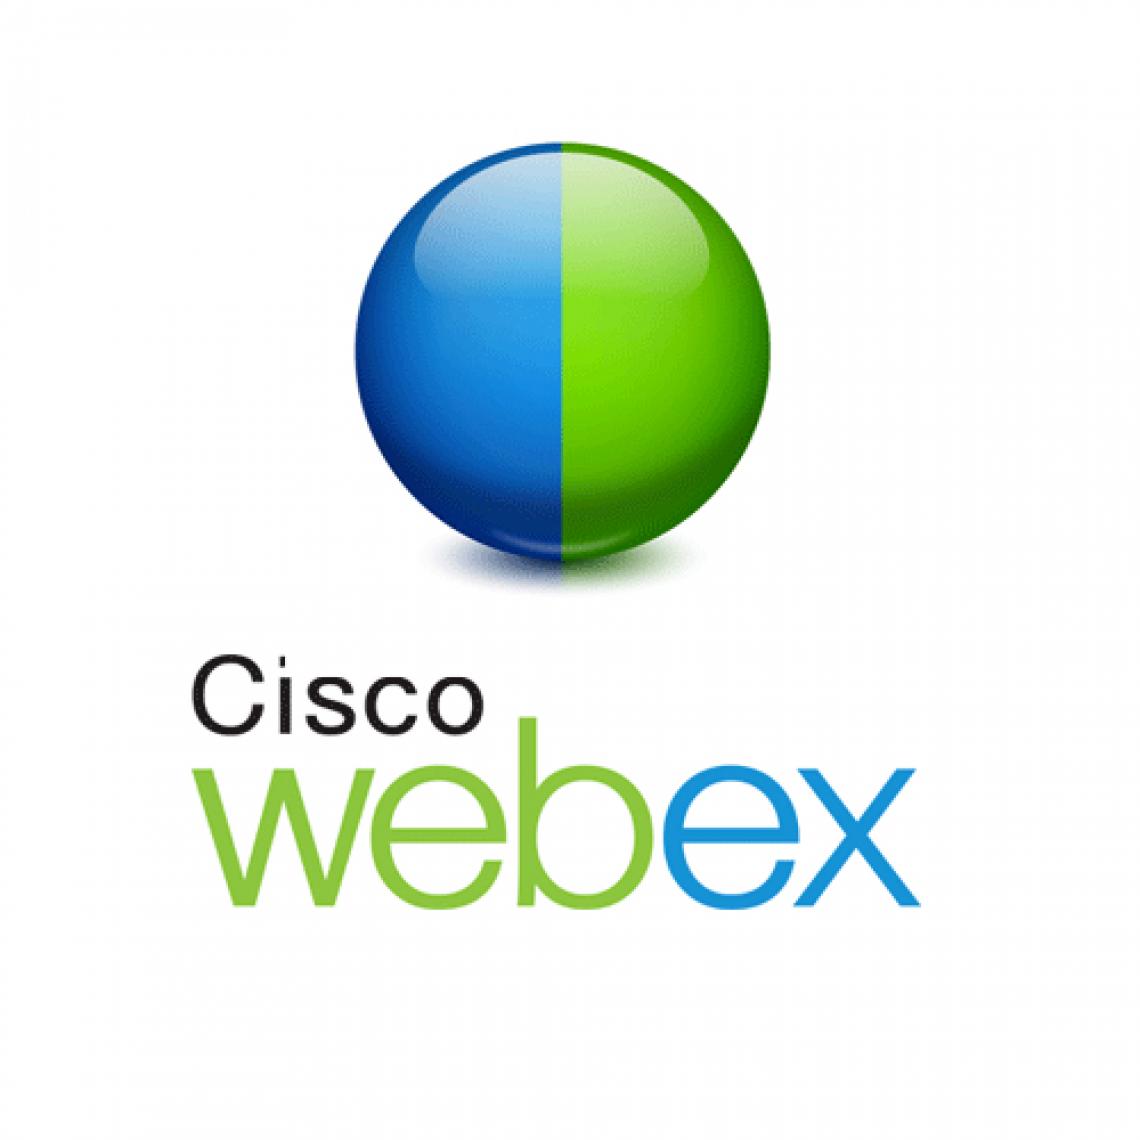 WebEx